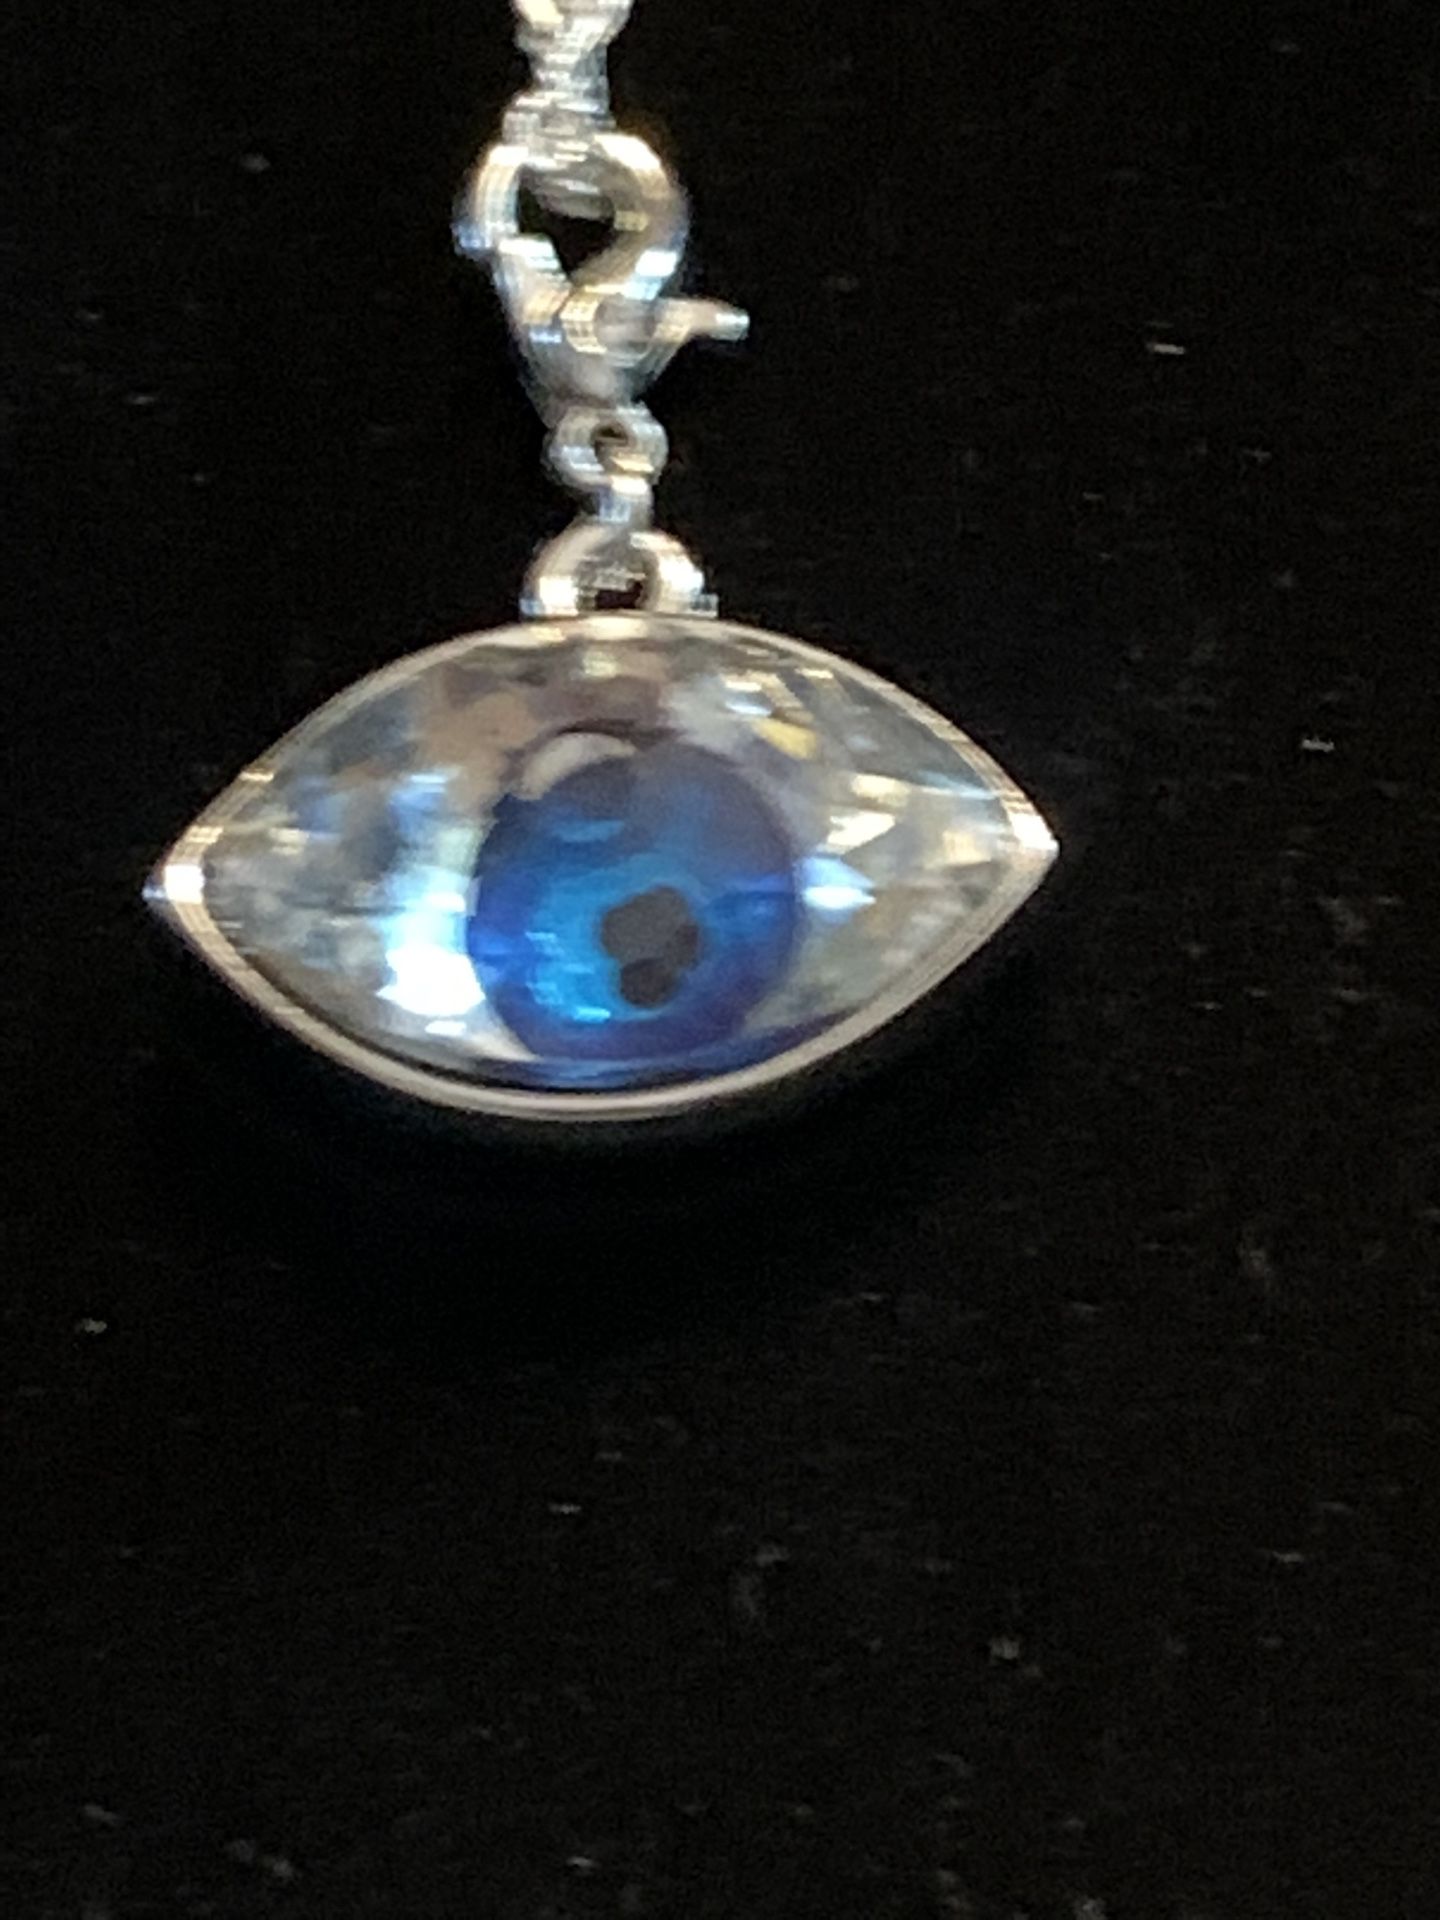 Stamped .925 Silver Necklace With Genuine Swarovski Crystal Eye Pendant 